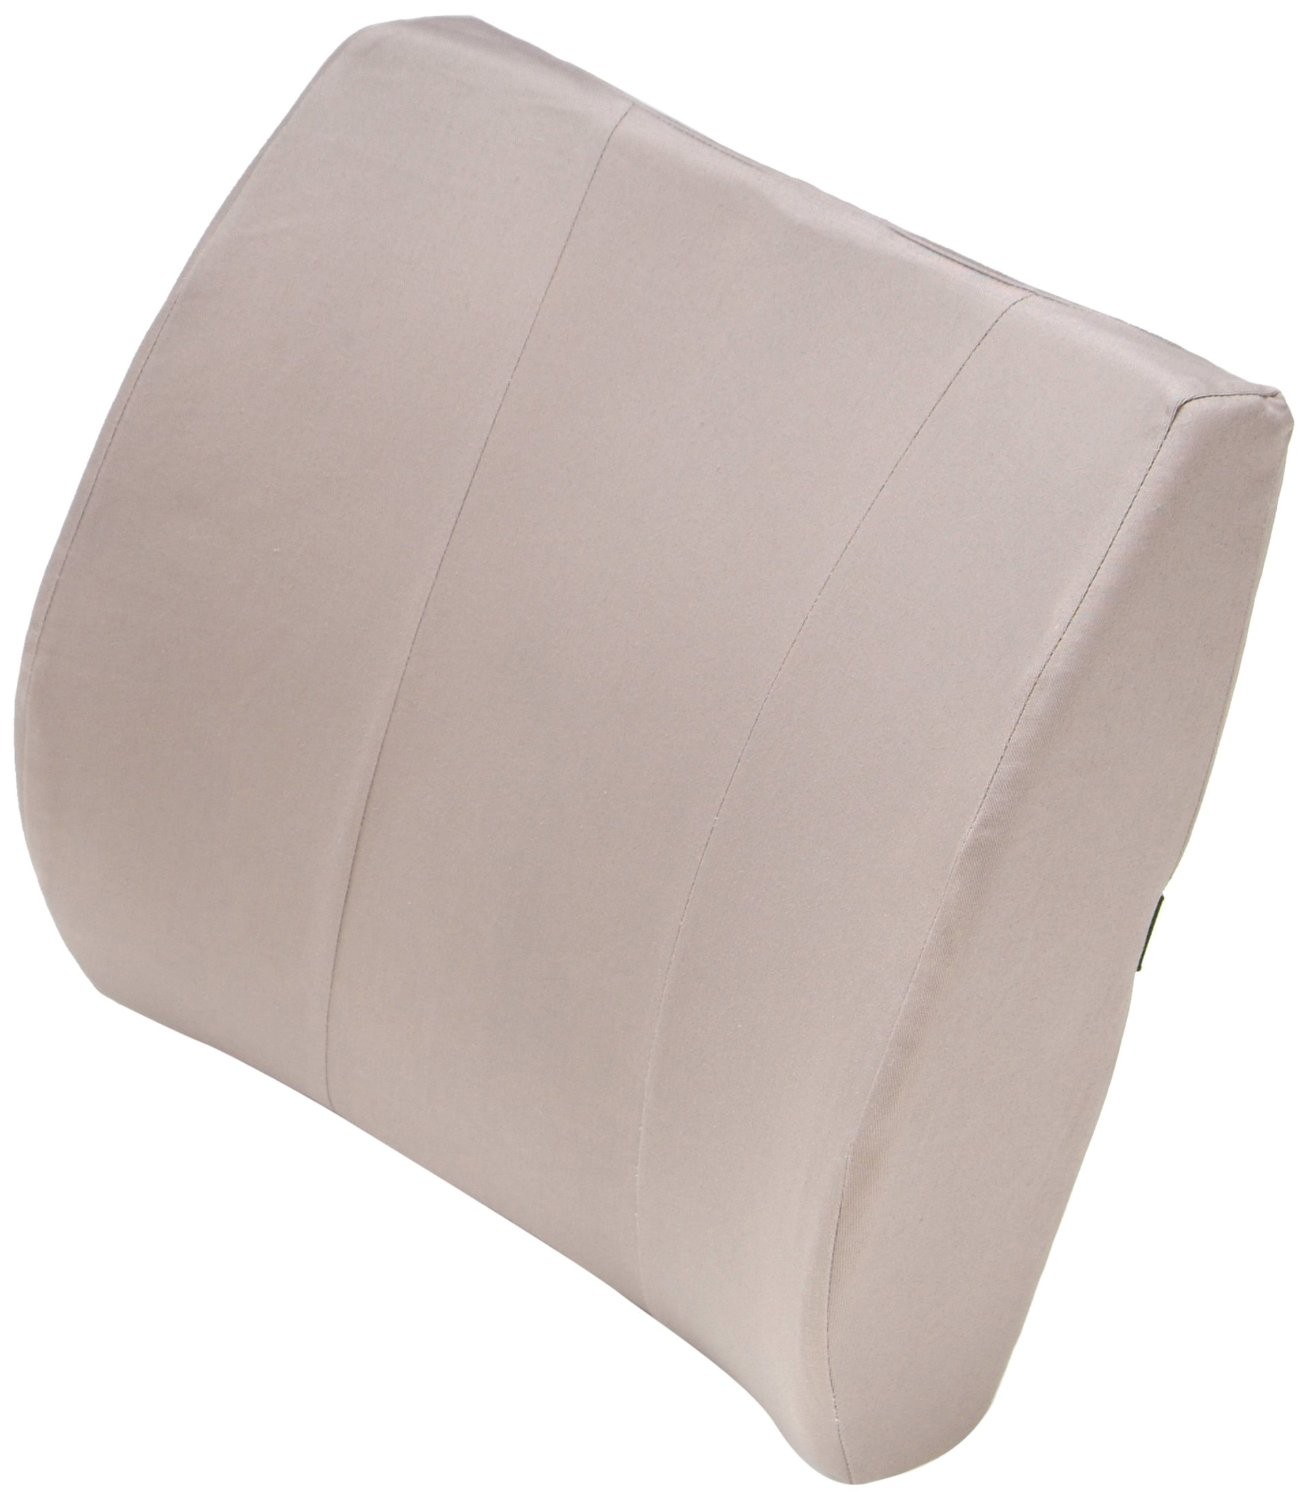 DeluxeComfort.com Hermell Products Foam Lumbar Cushion